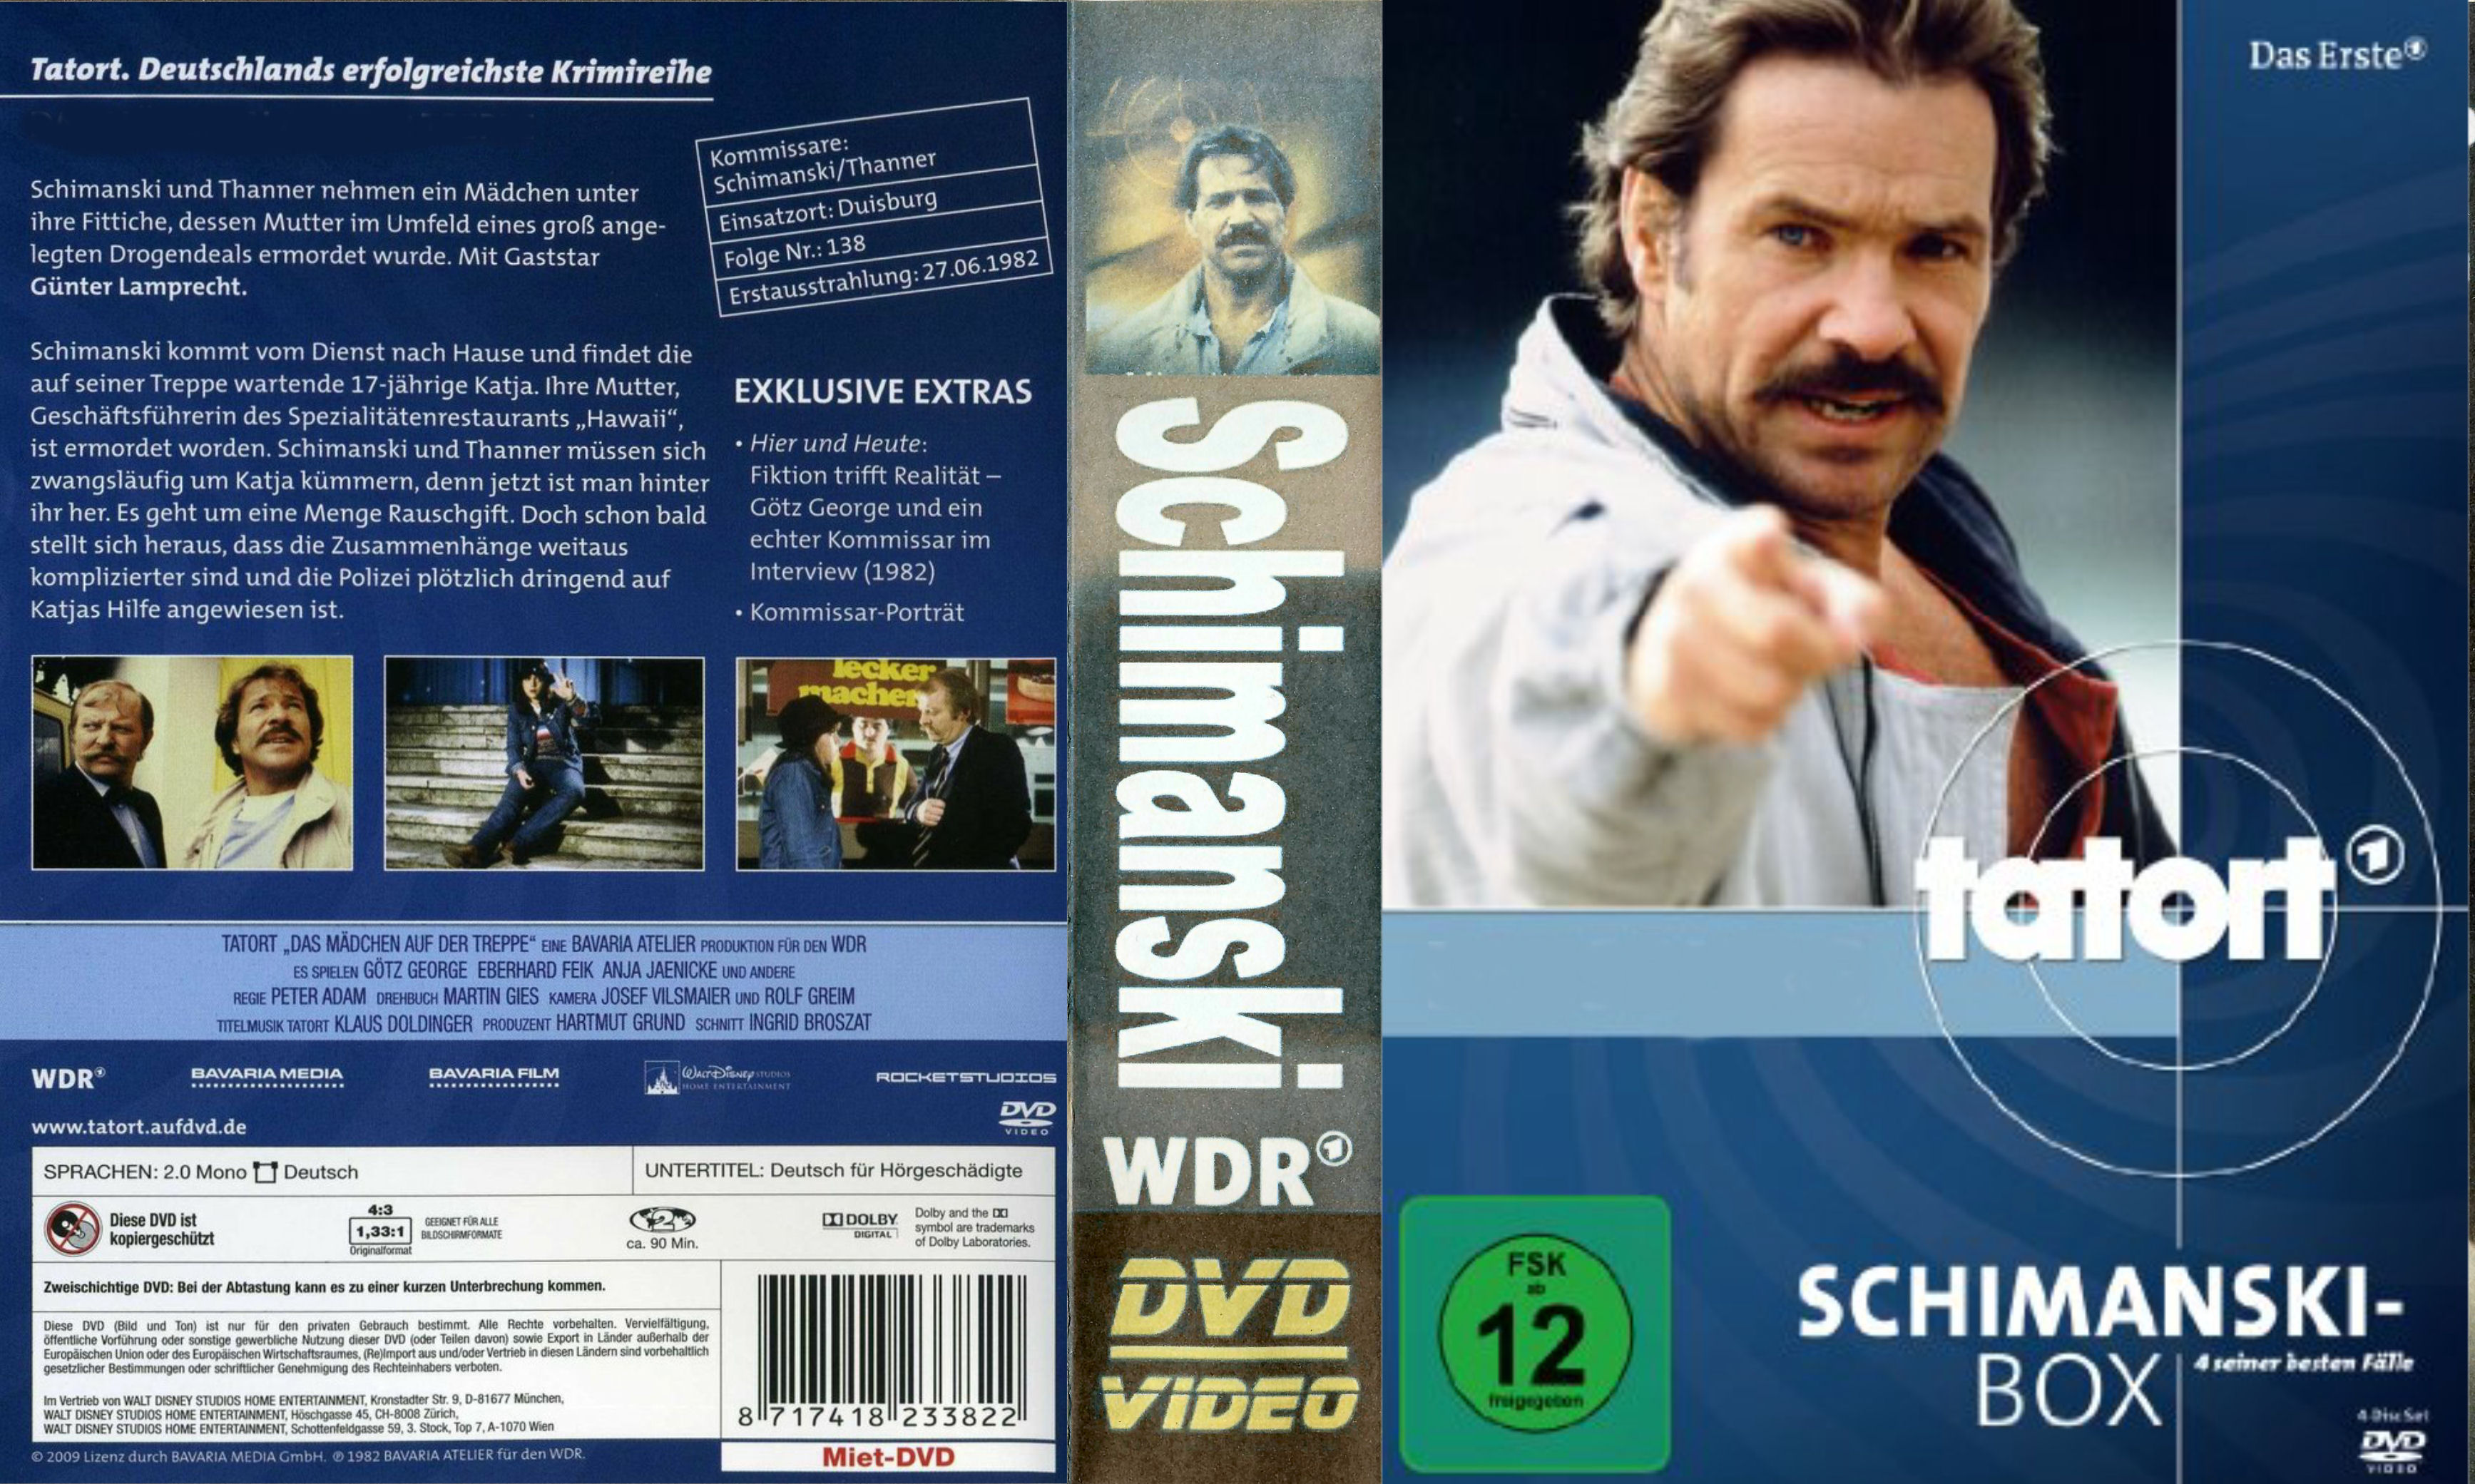 Schimanski Collectie Tatort No Subs - DvD 9